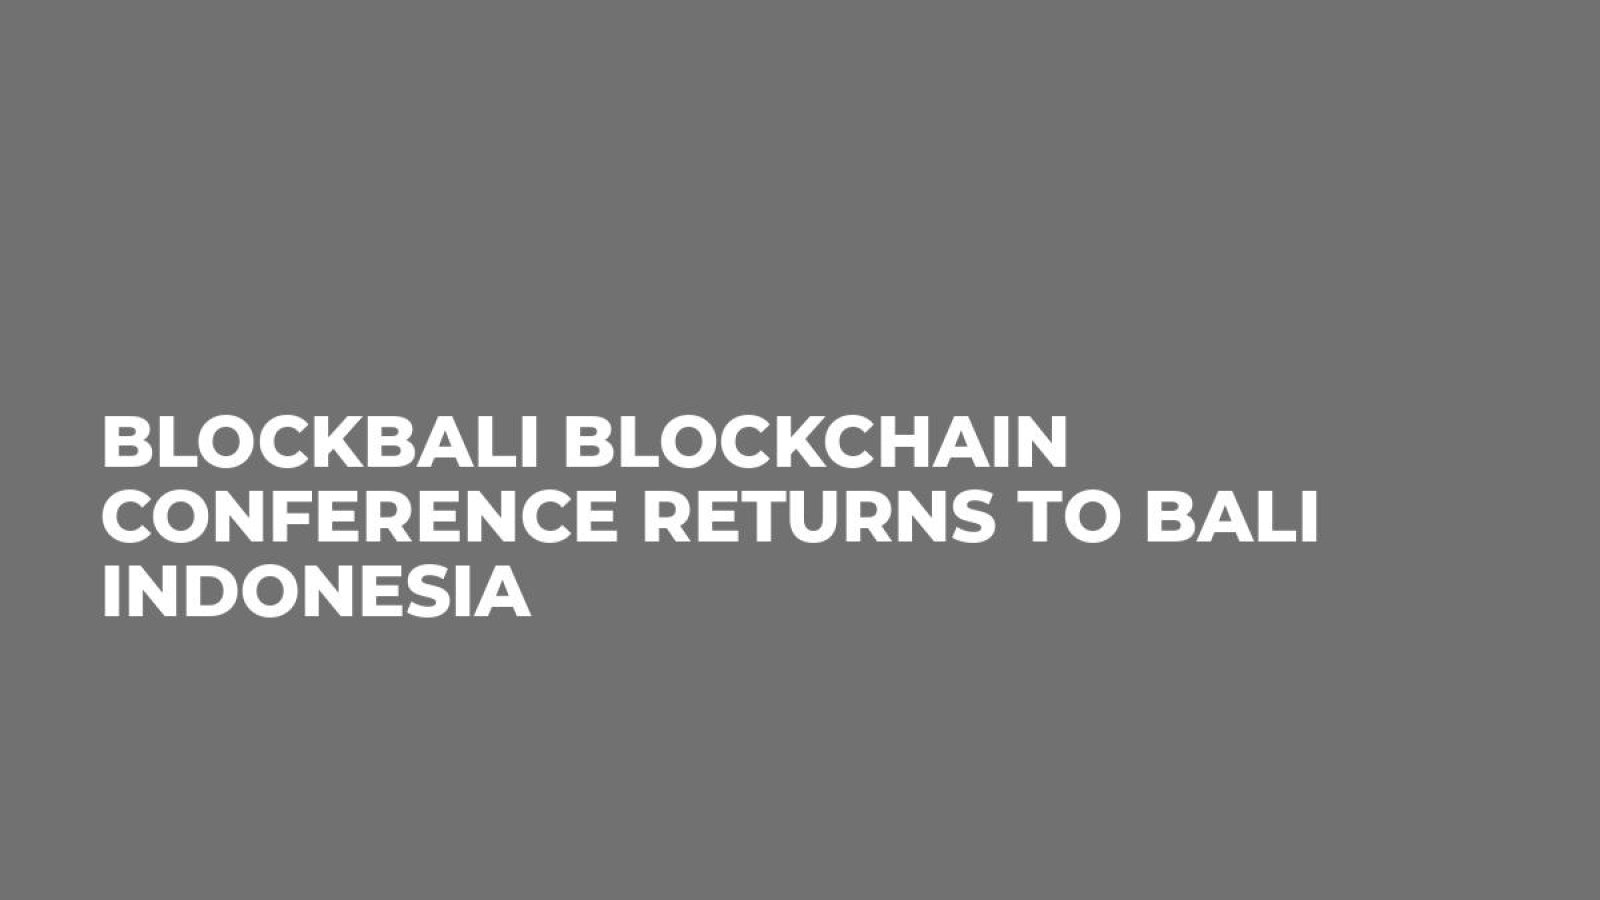 Blockbali Blockchain Conference returns to Bali Indonesia